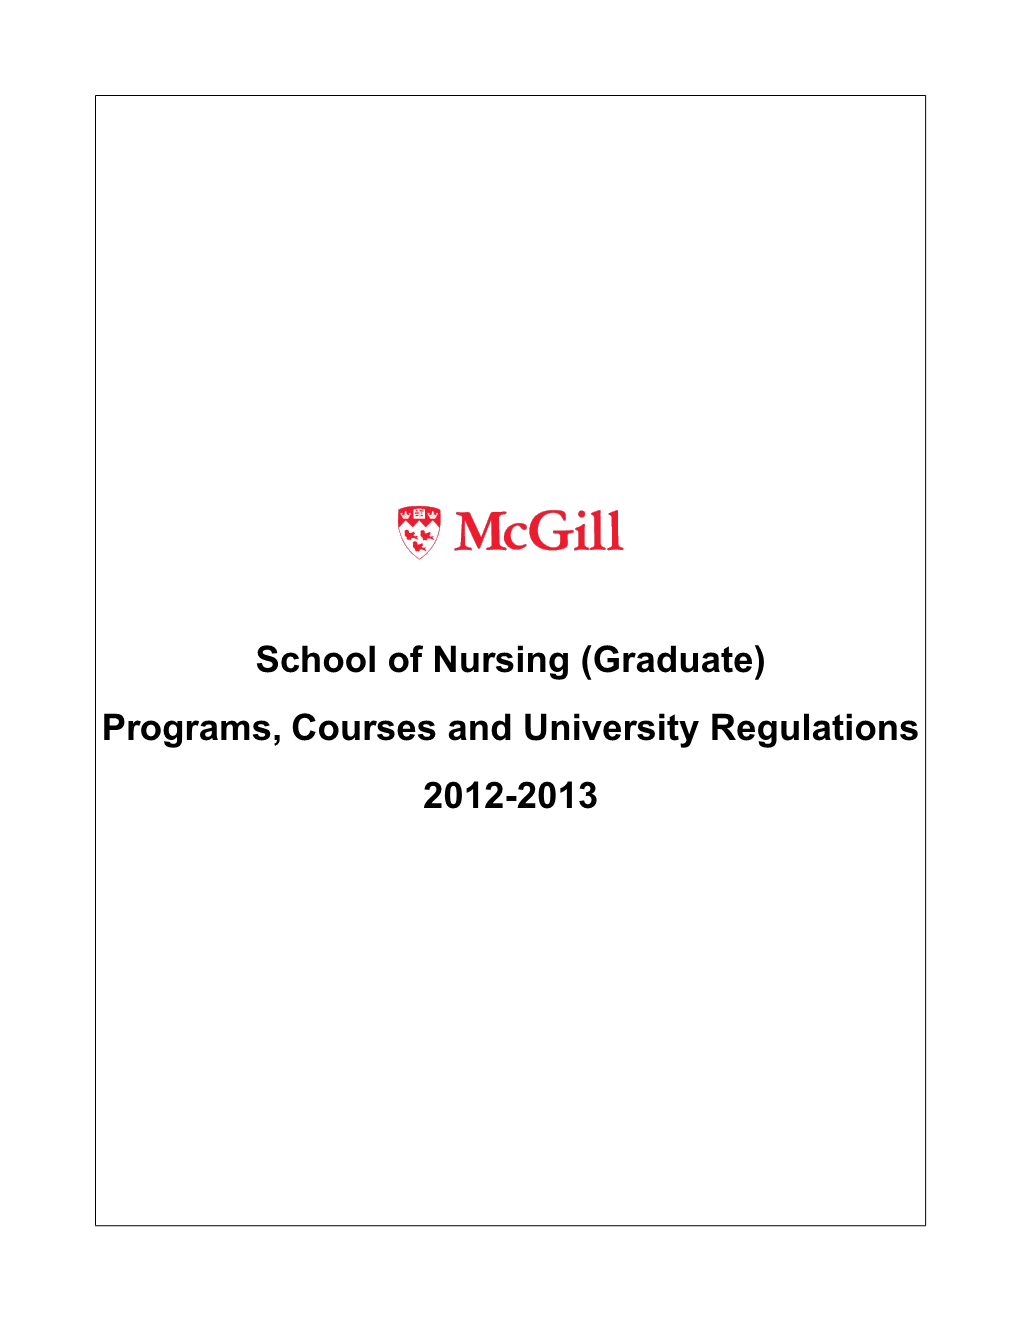 School of Nursing (Graduate) Programs, Courses and University Regulations 2012-2013